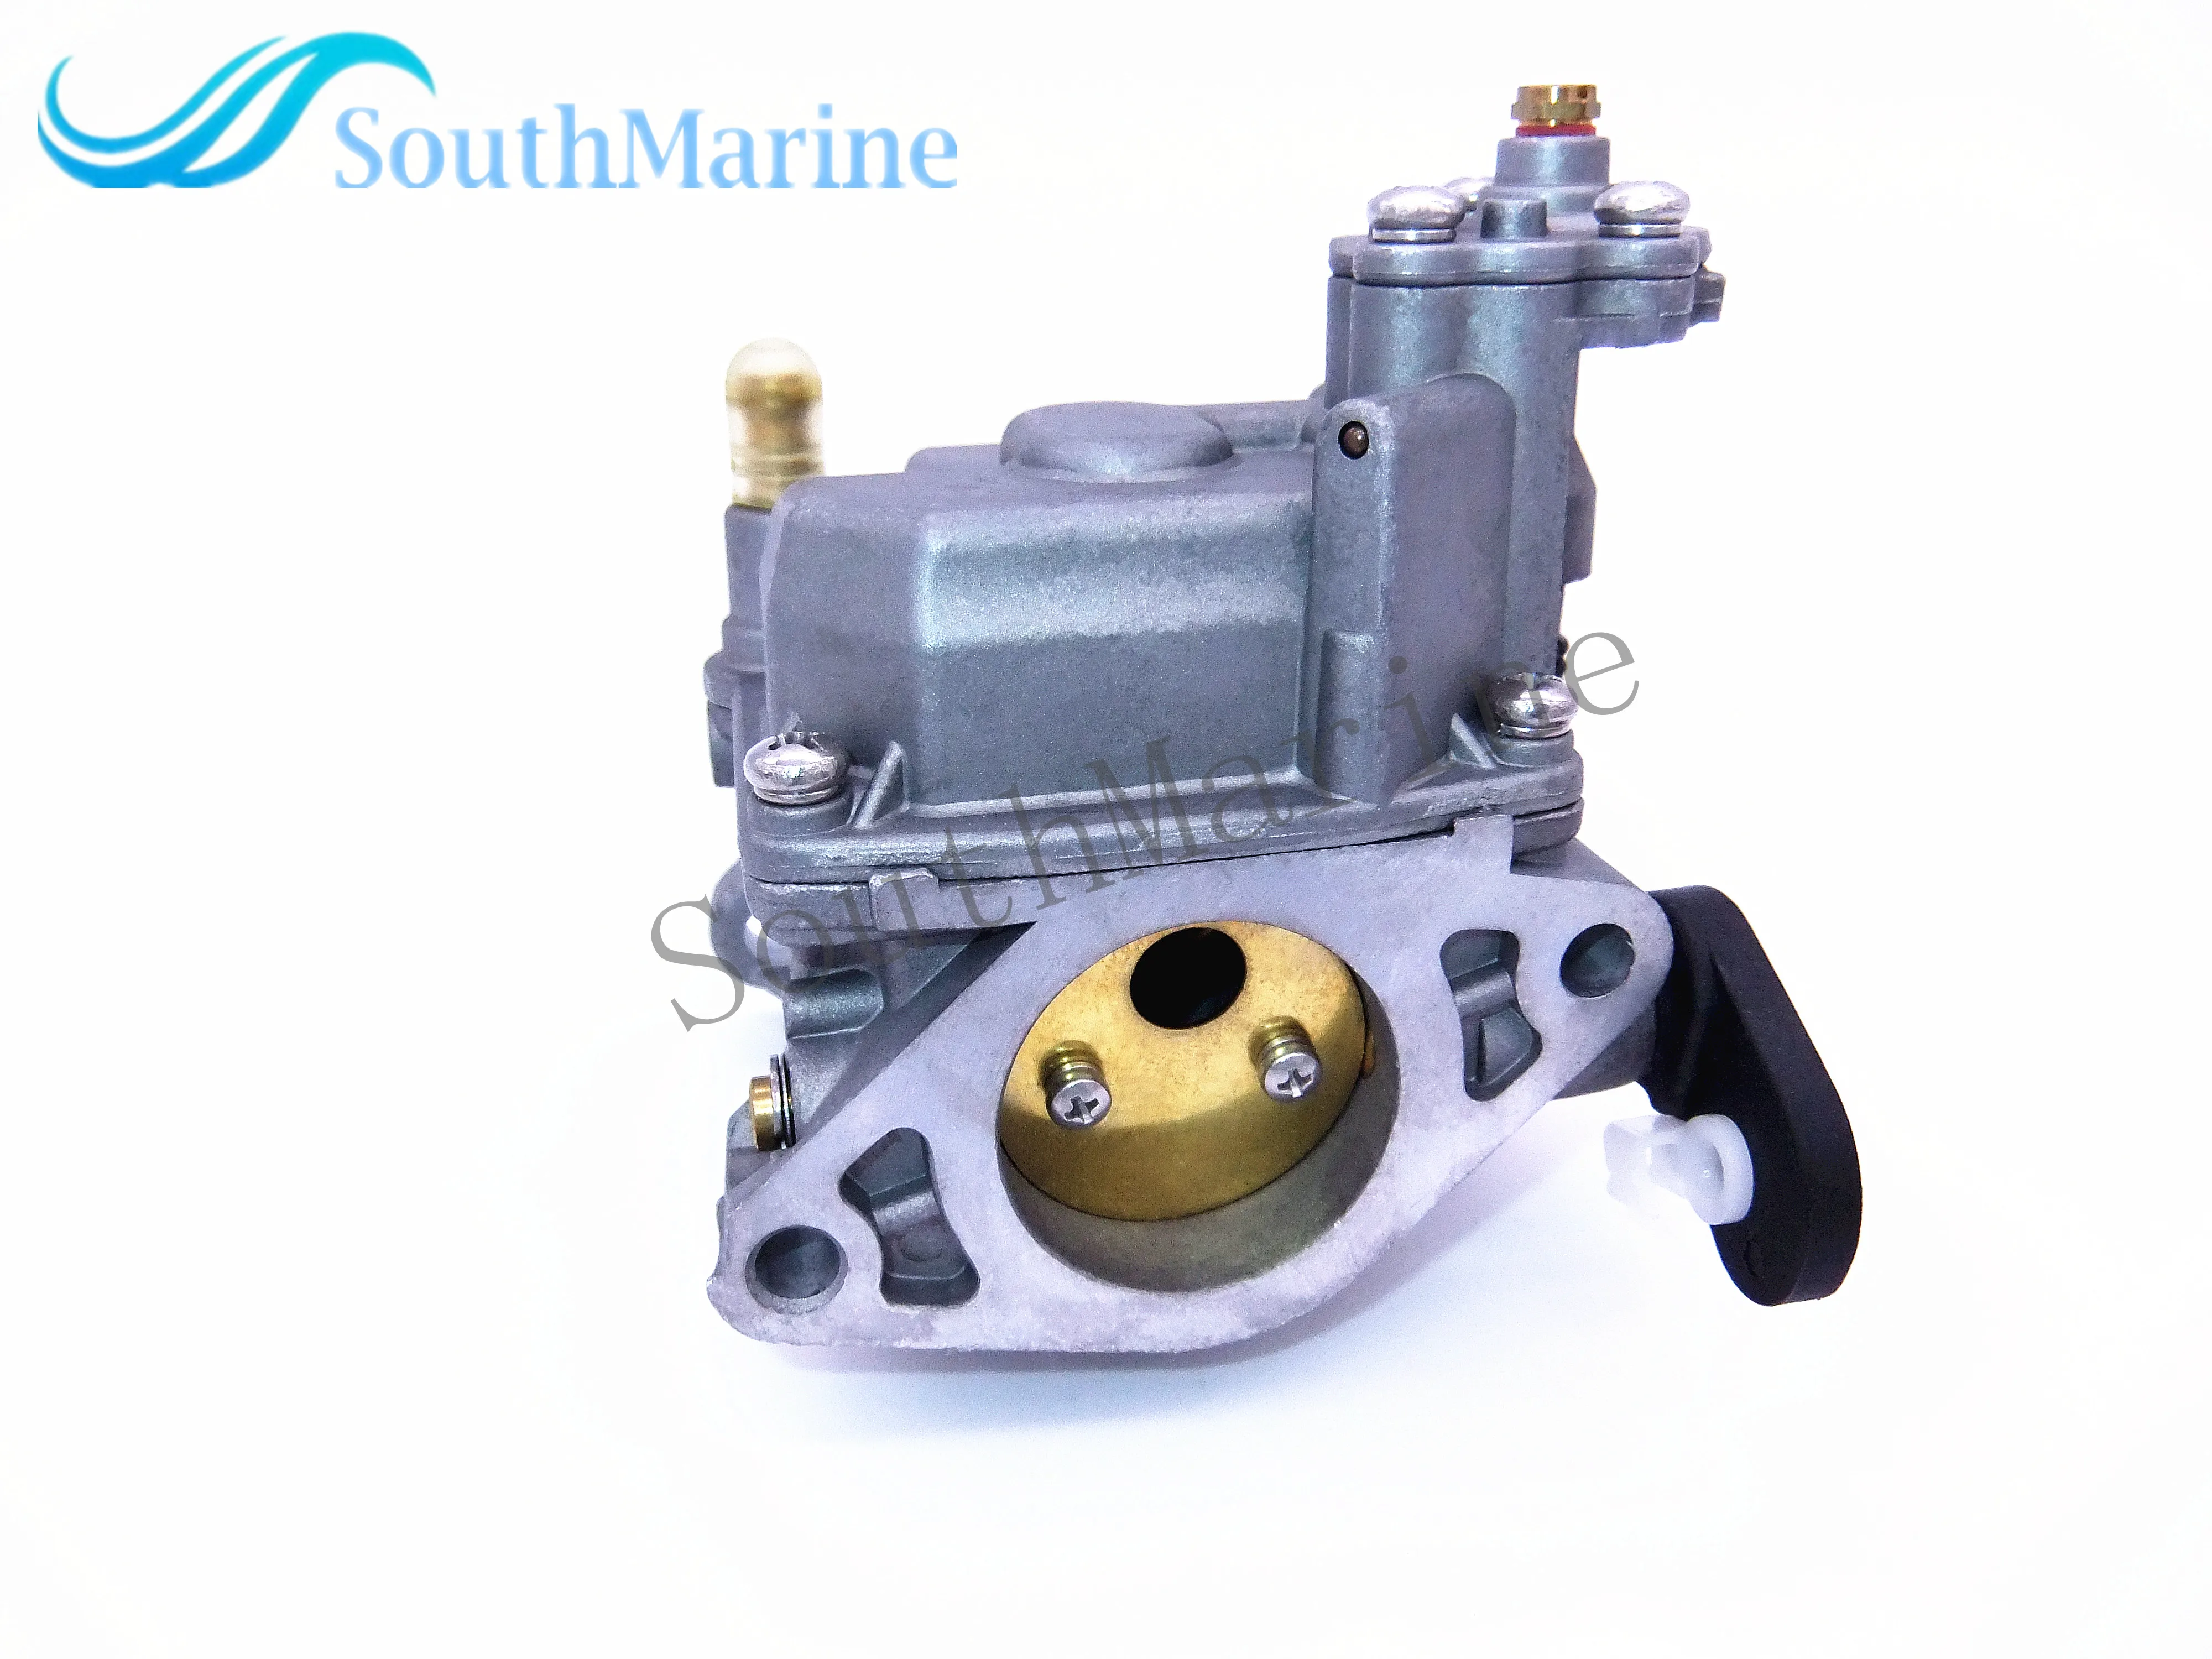 6D4-14301-00 Outboard Engine Carburetor Assy for Yamaha 9.9HP 15HP 4-stroke Boat Motor, Manual Start